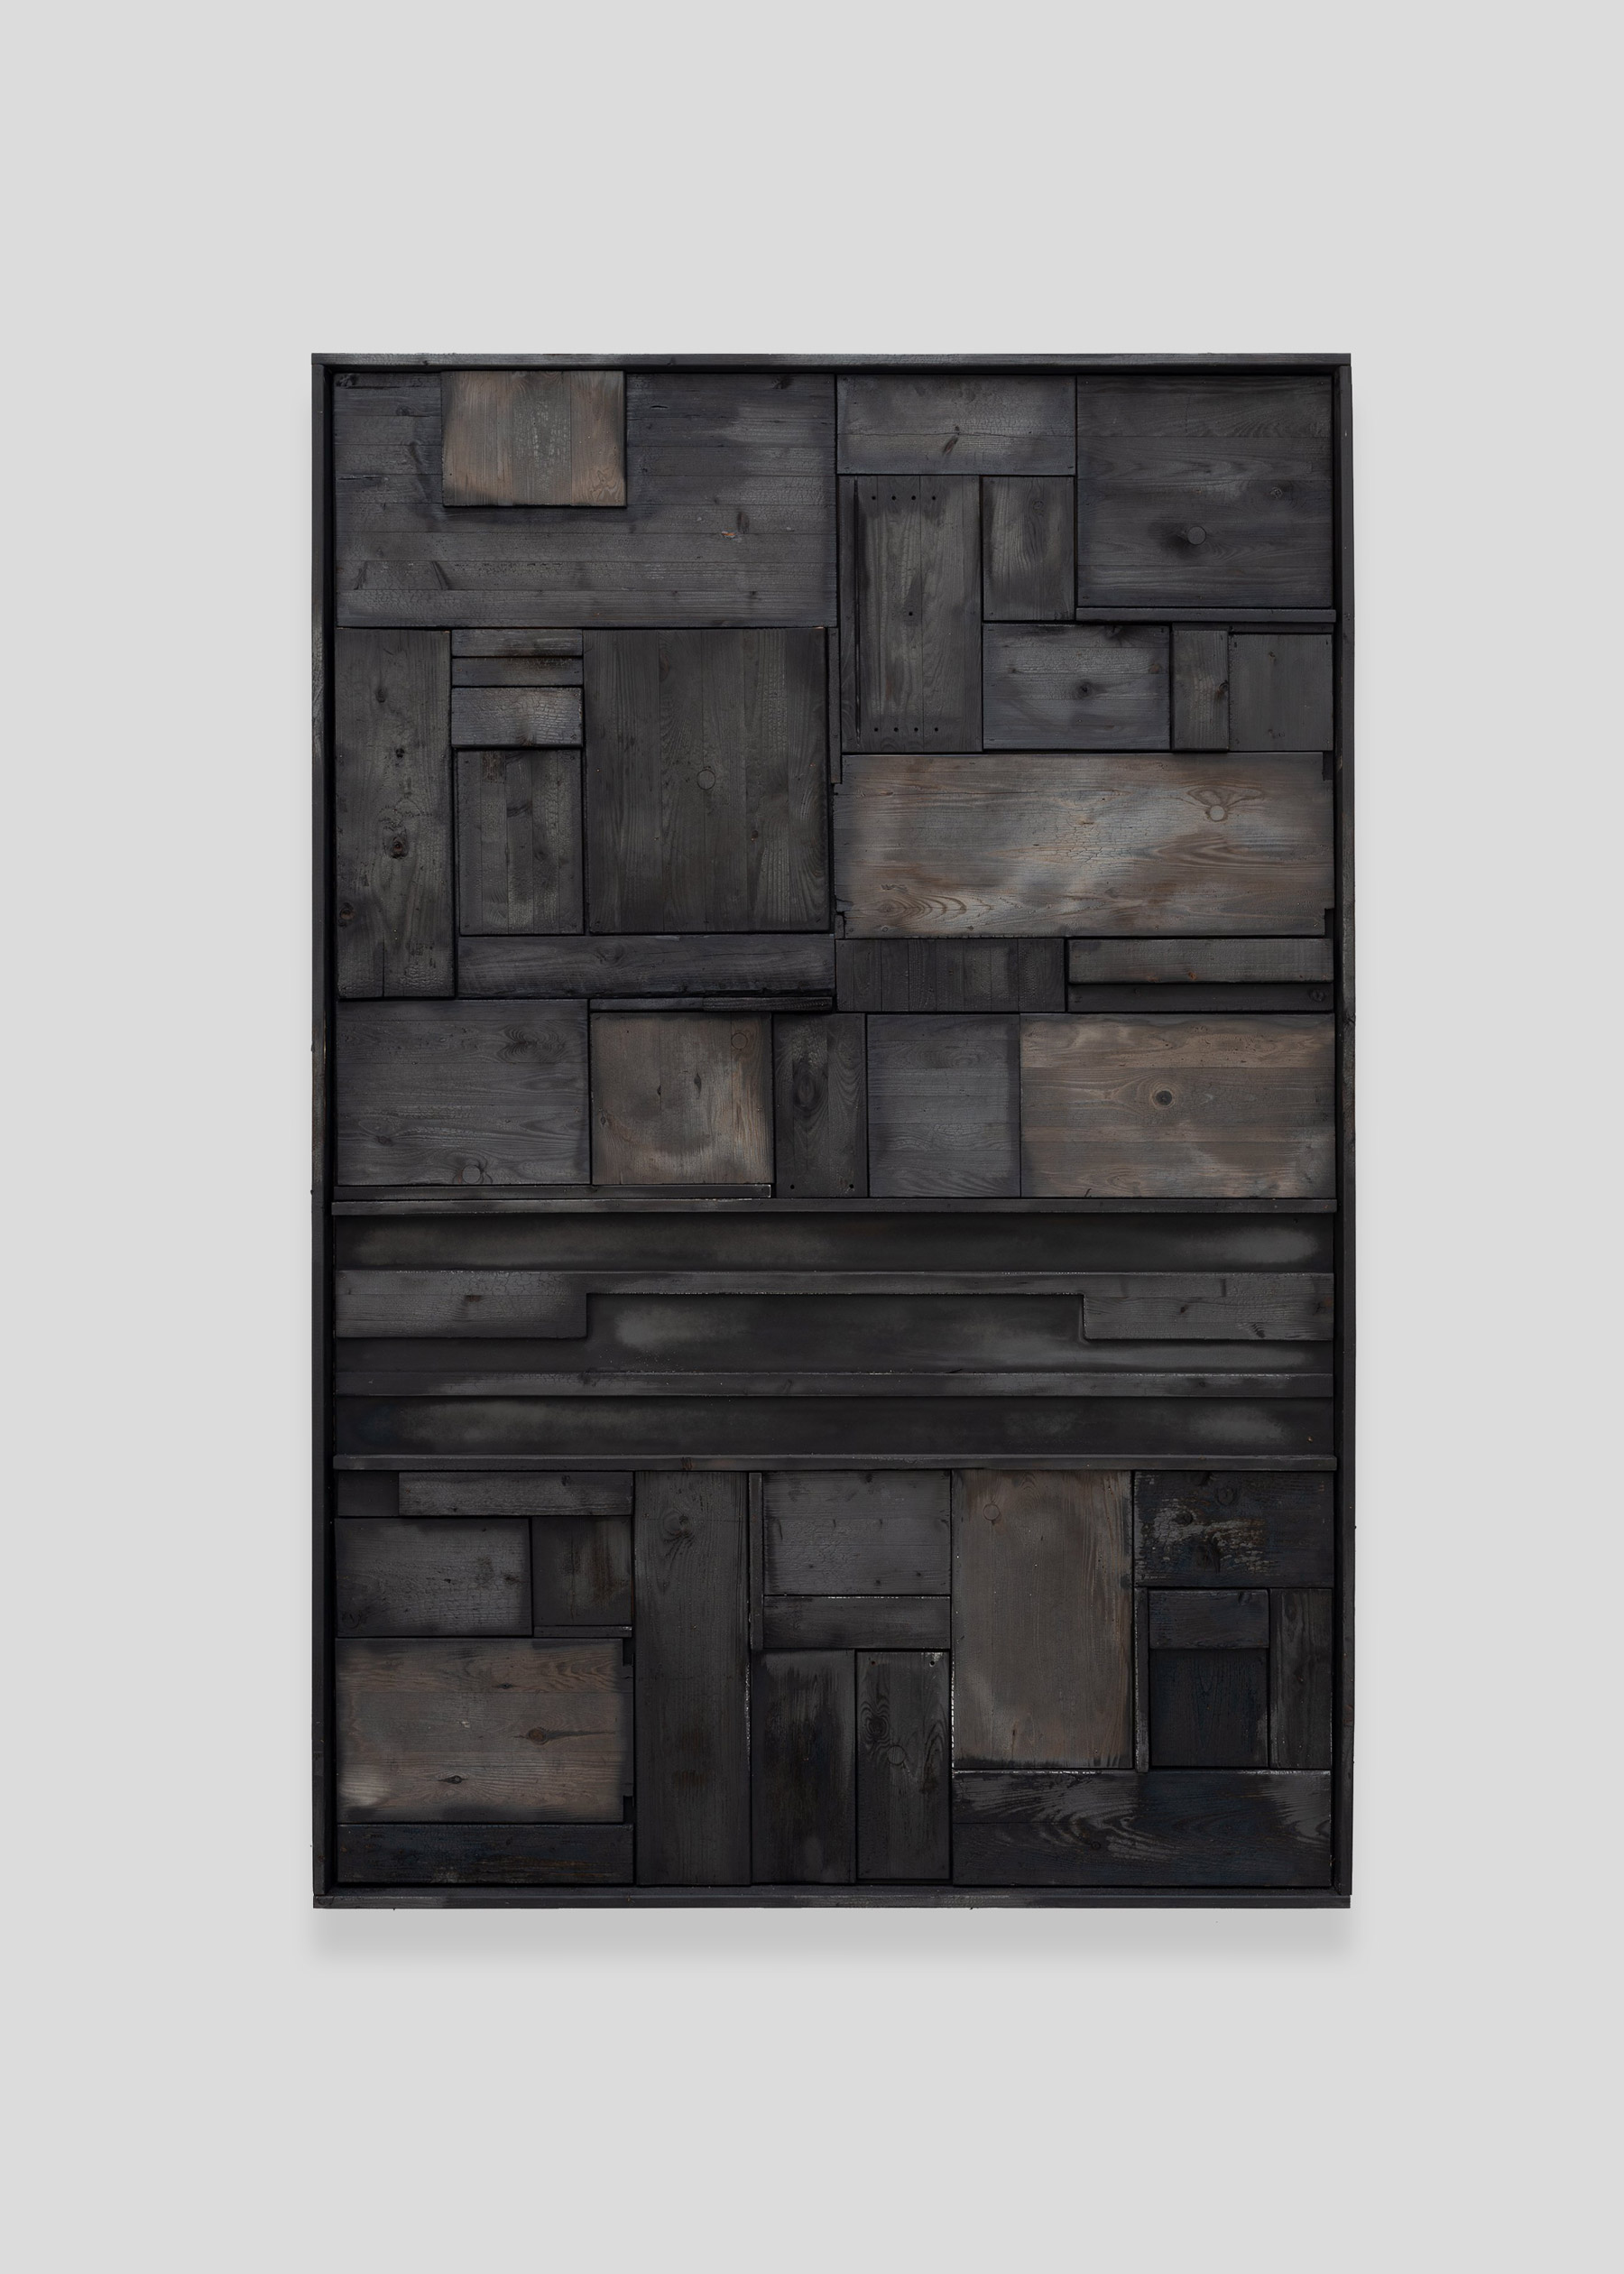 Søren Sejr, Relief, burnt wood, 245 x 165 cm © The Artist